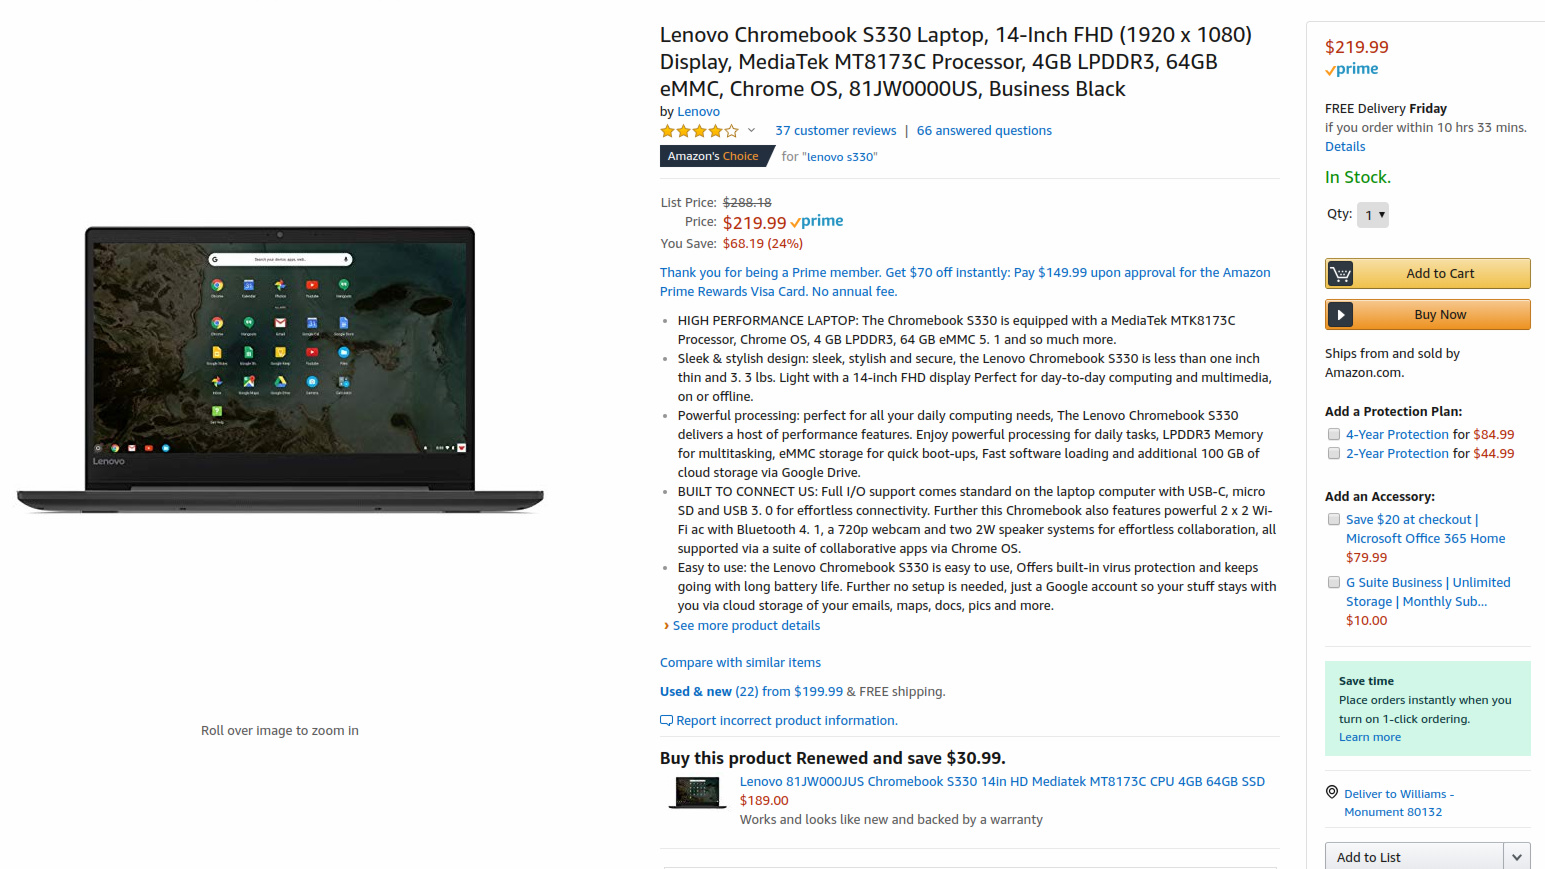 Deal on the Lenovo Chromebook S330.